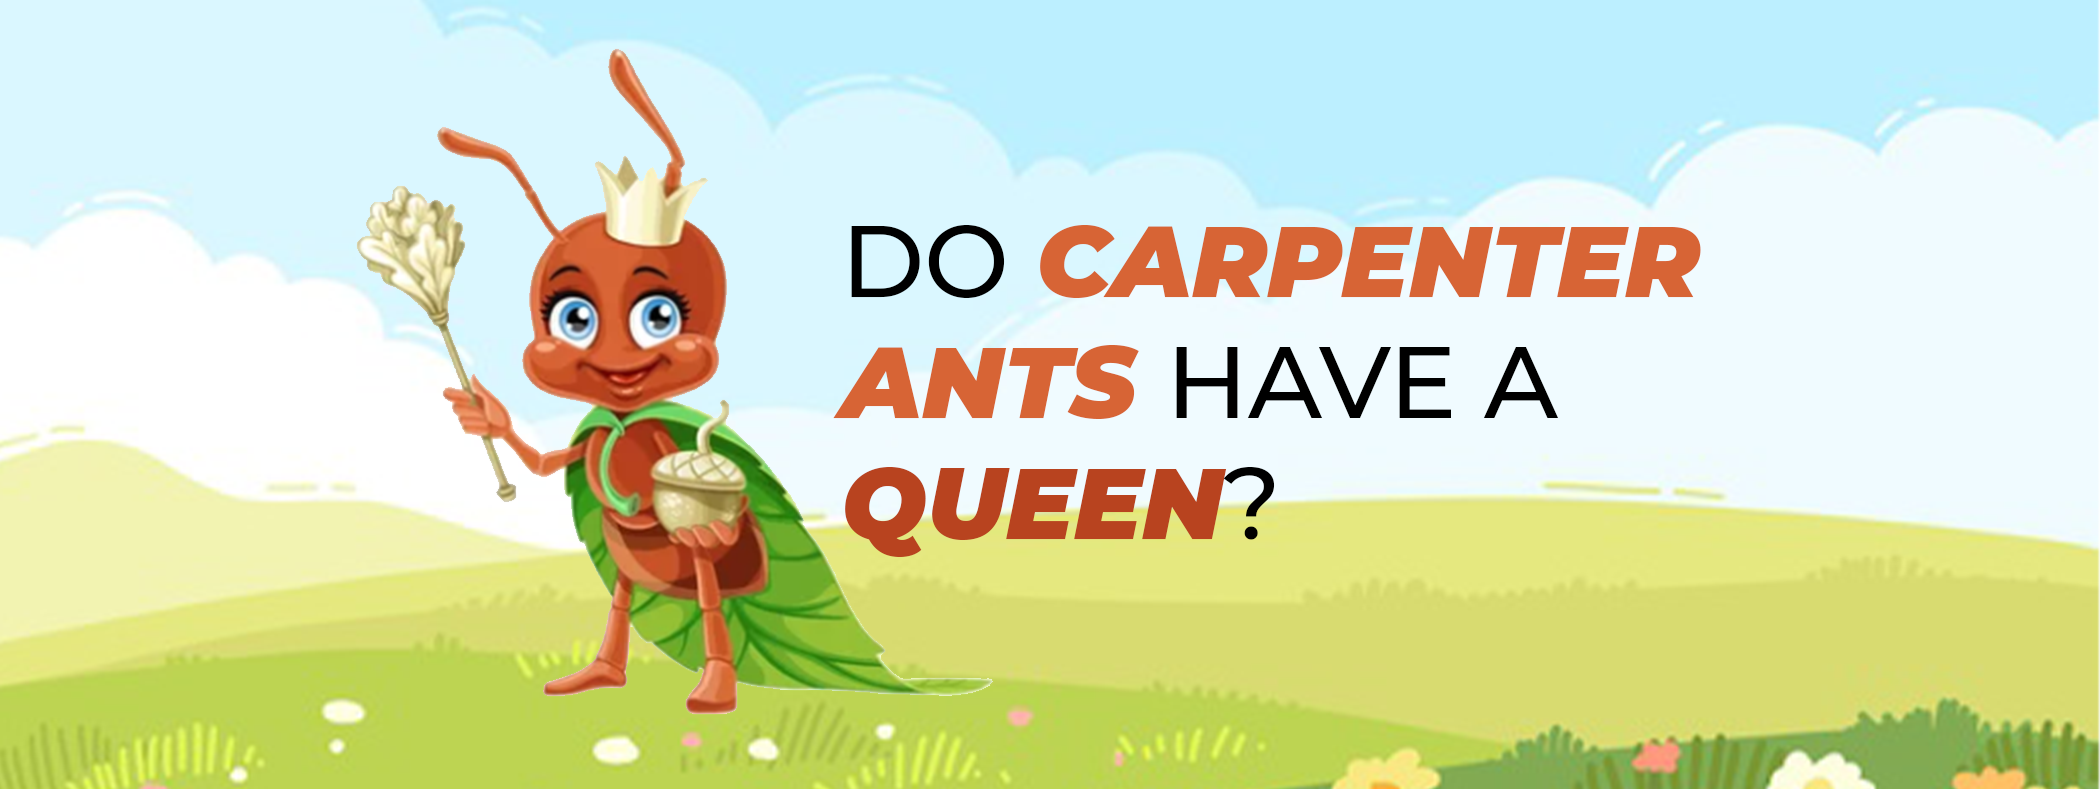 Do Carpenter Ants Have a Queen